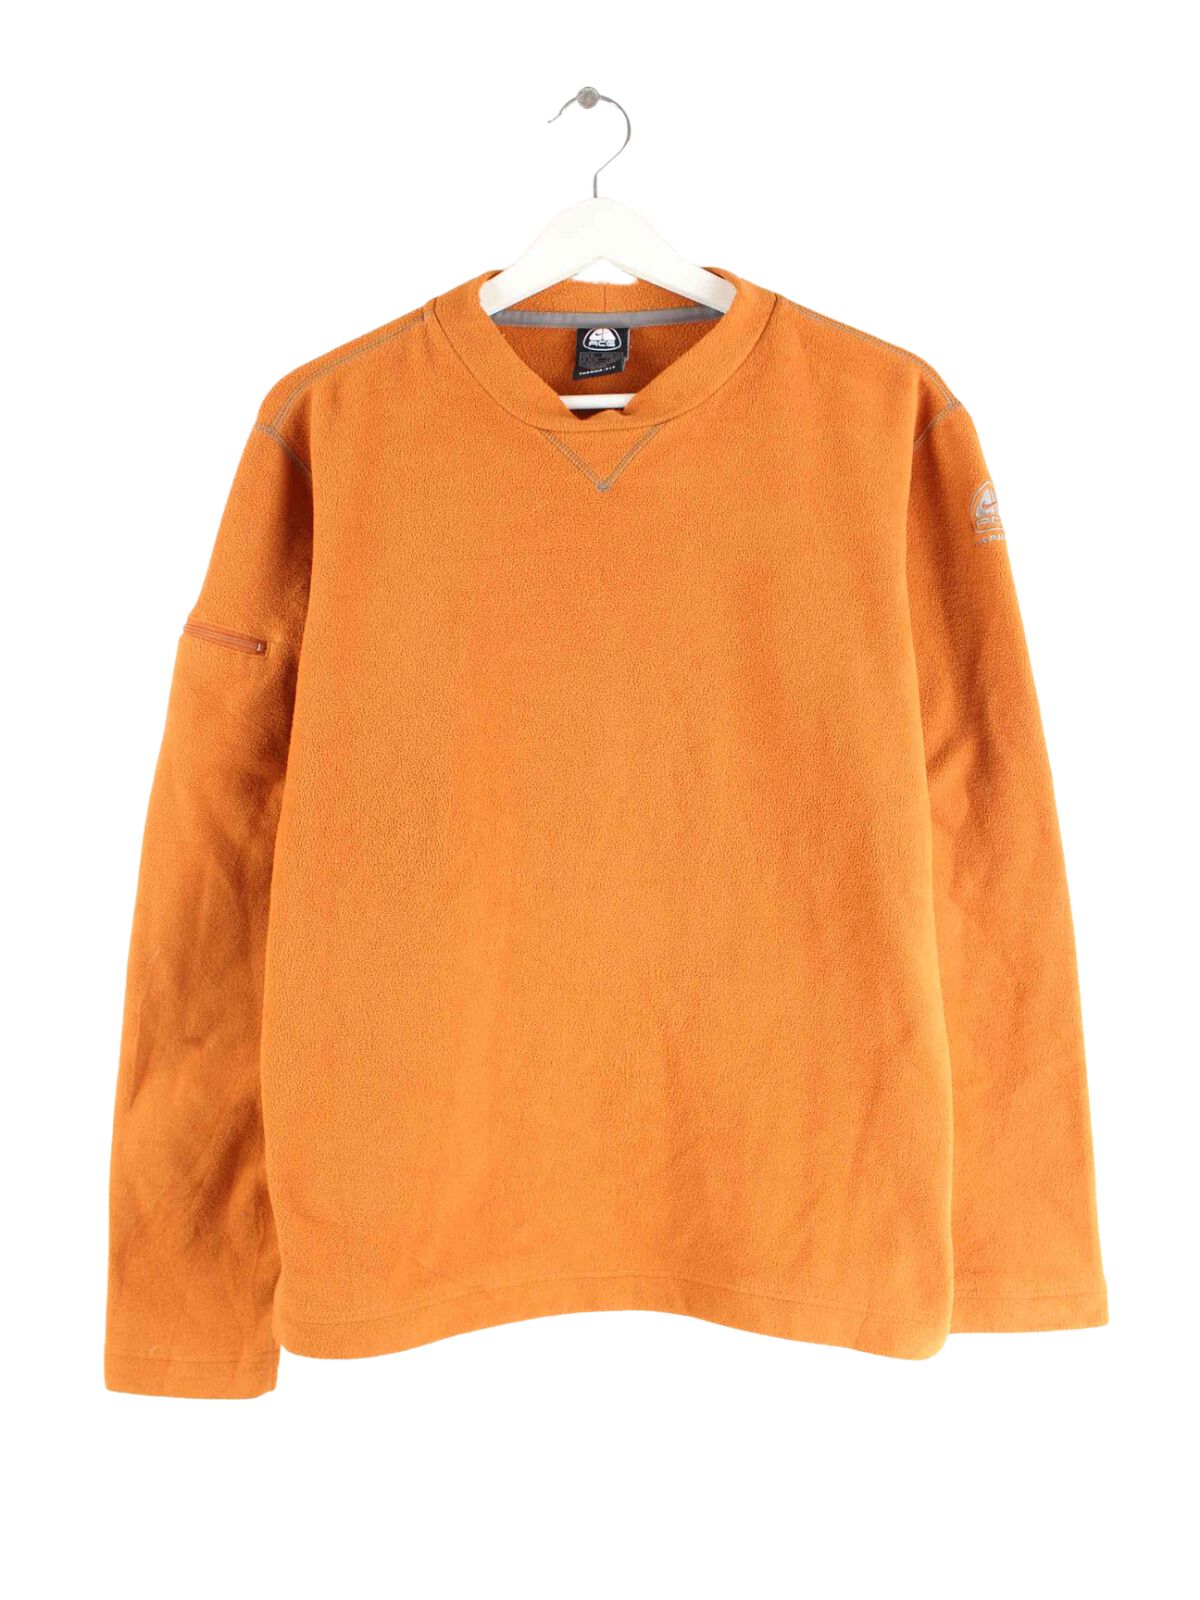 Nike ACG y2k Fleece Sweater Orange S (front image)